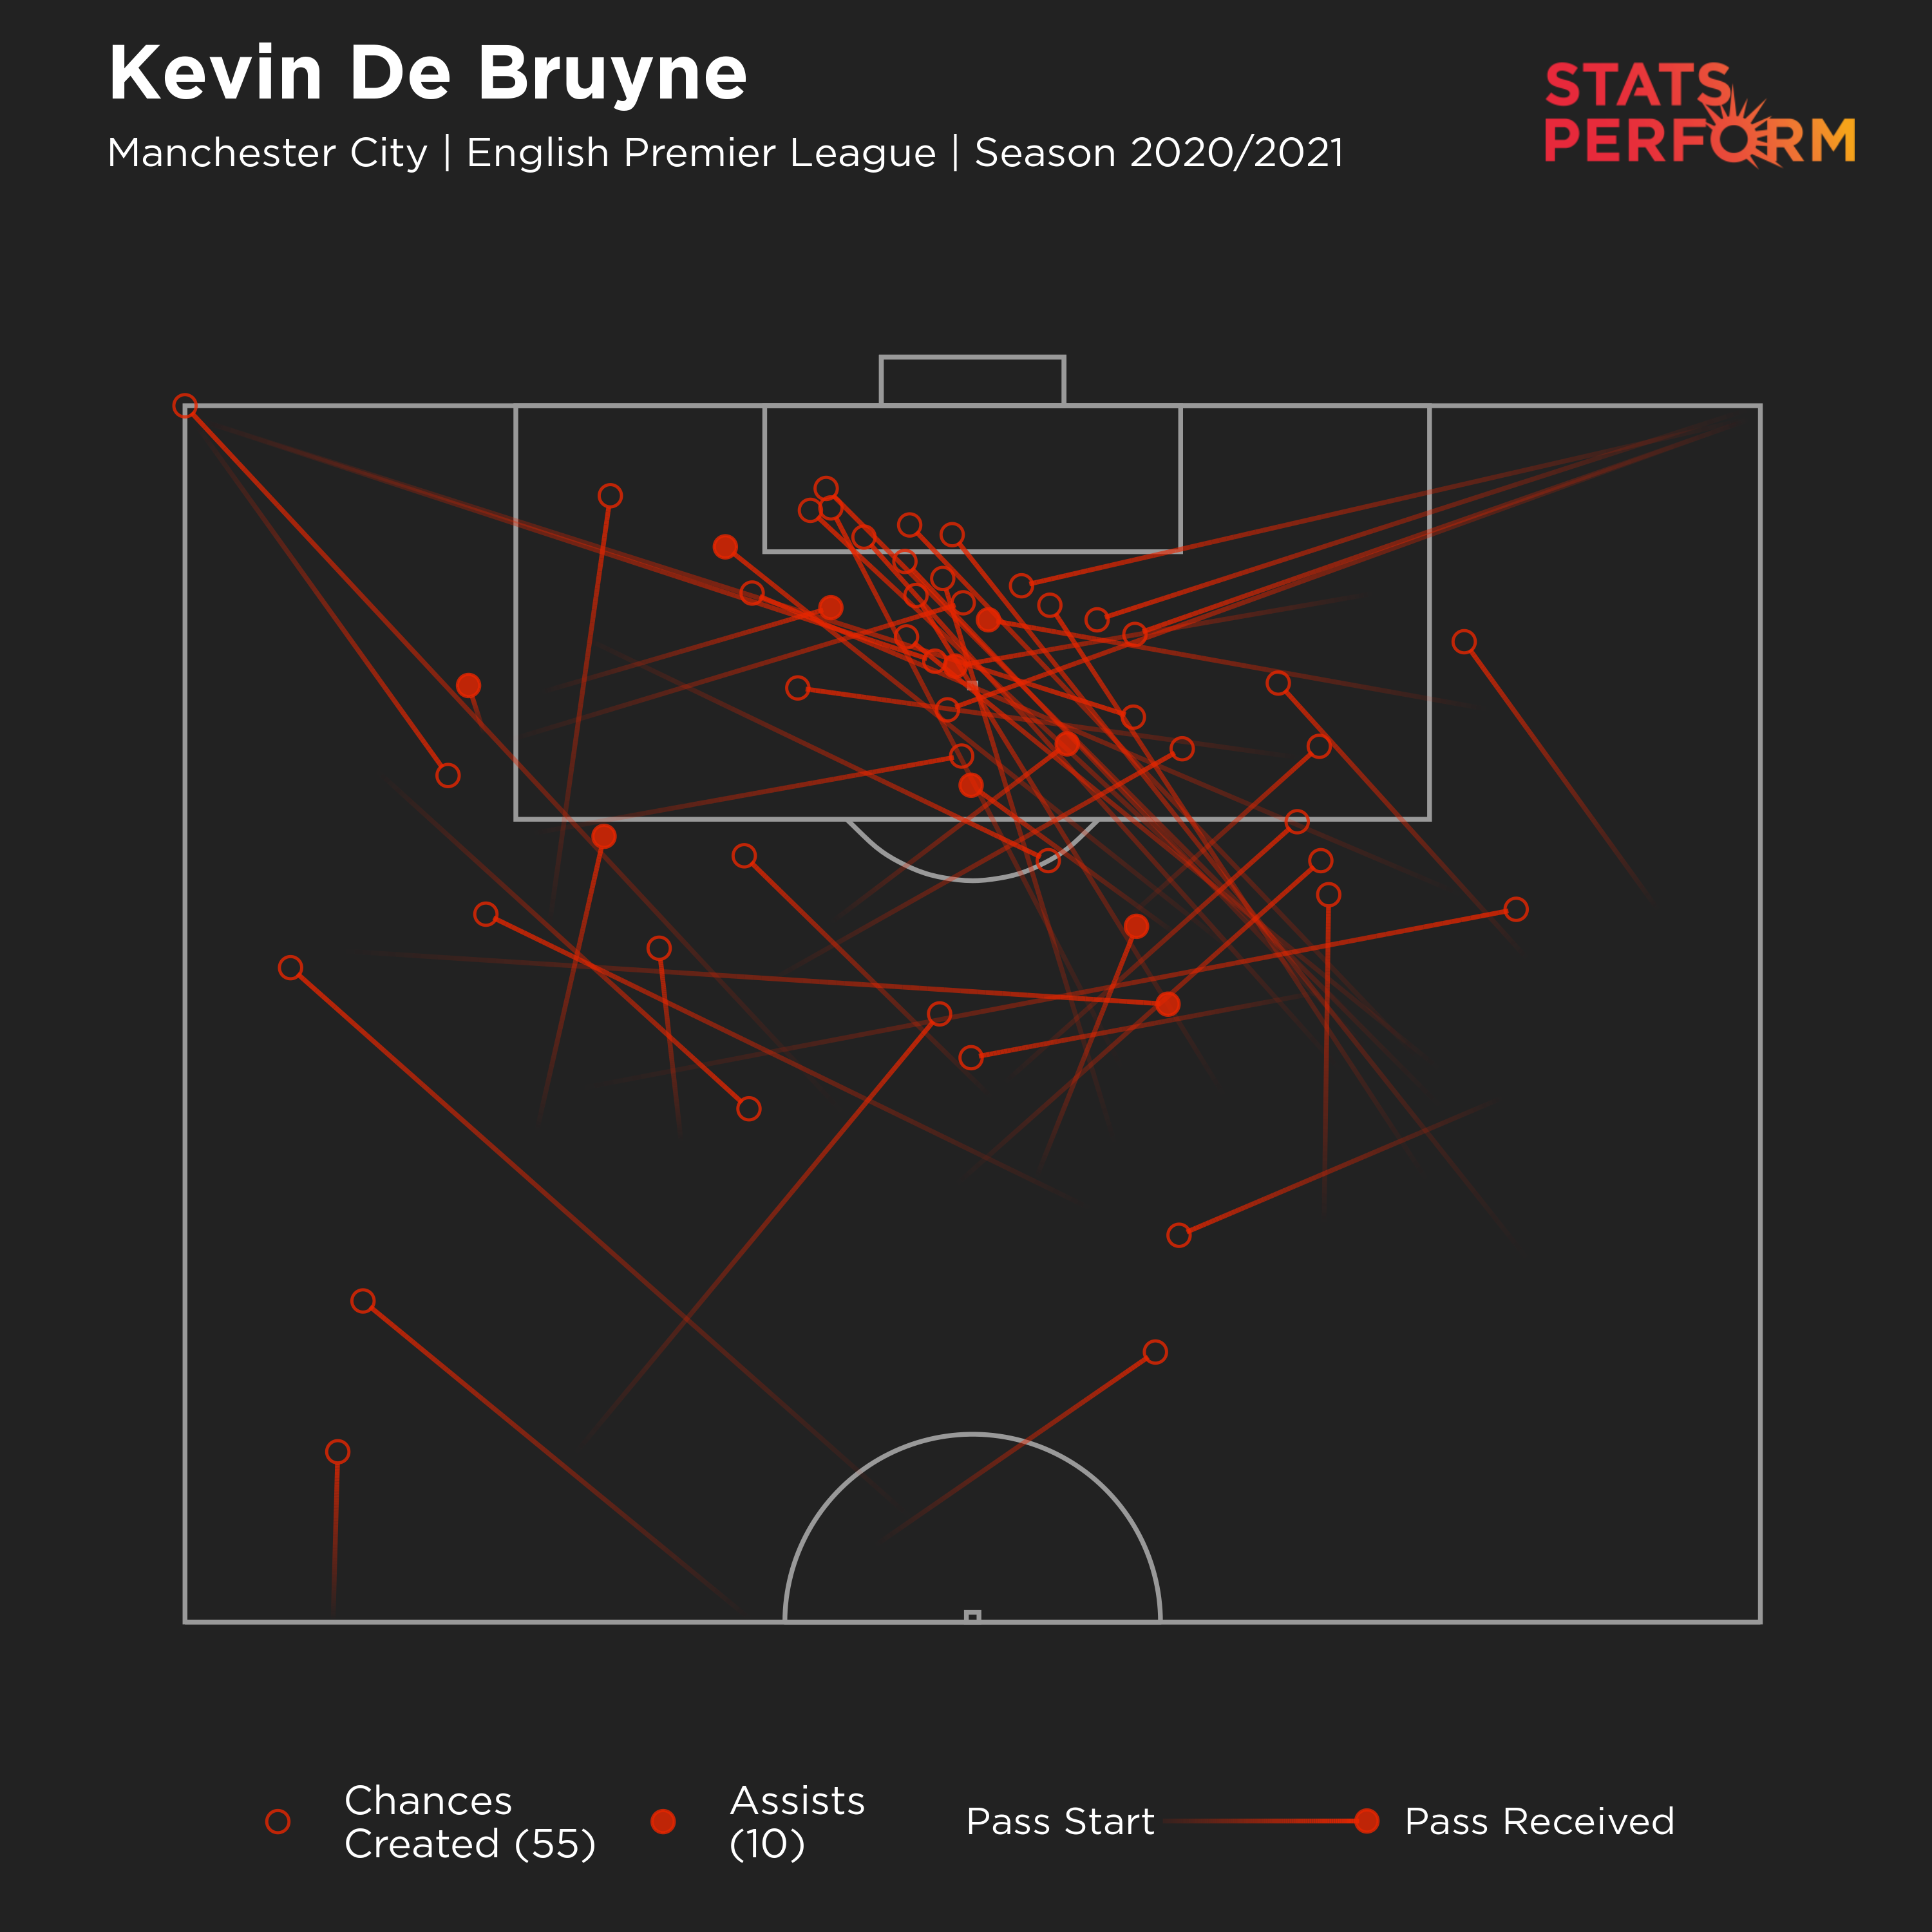 Kevin De Bruyne has created 55 chances in the Premier League this season